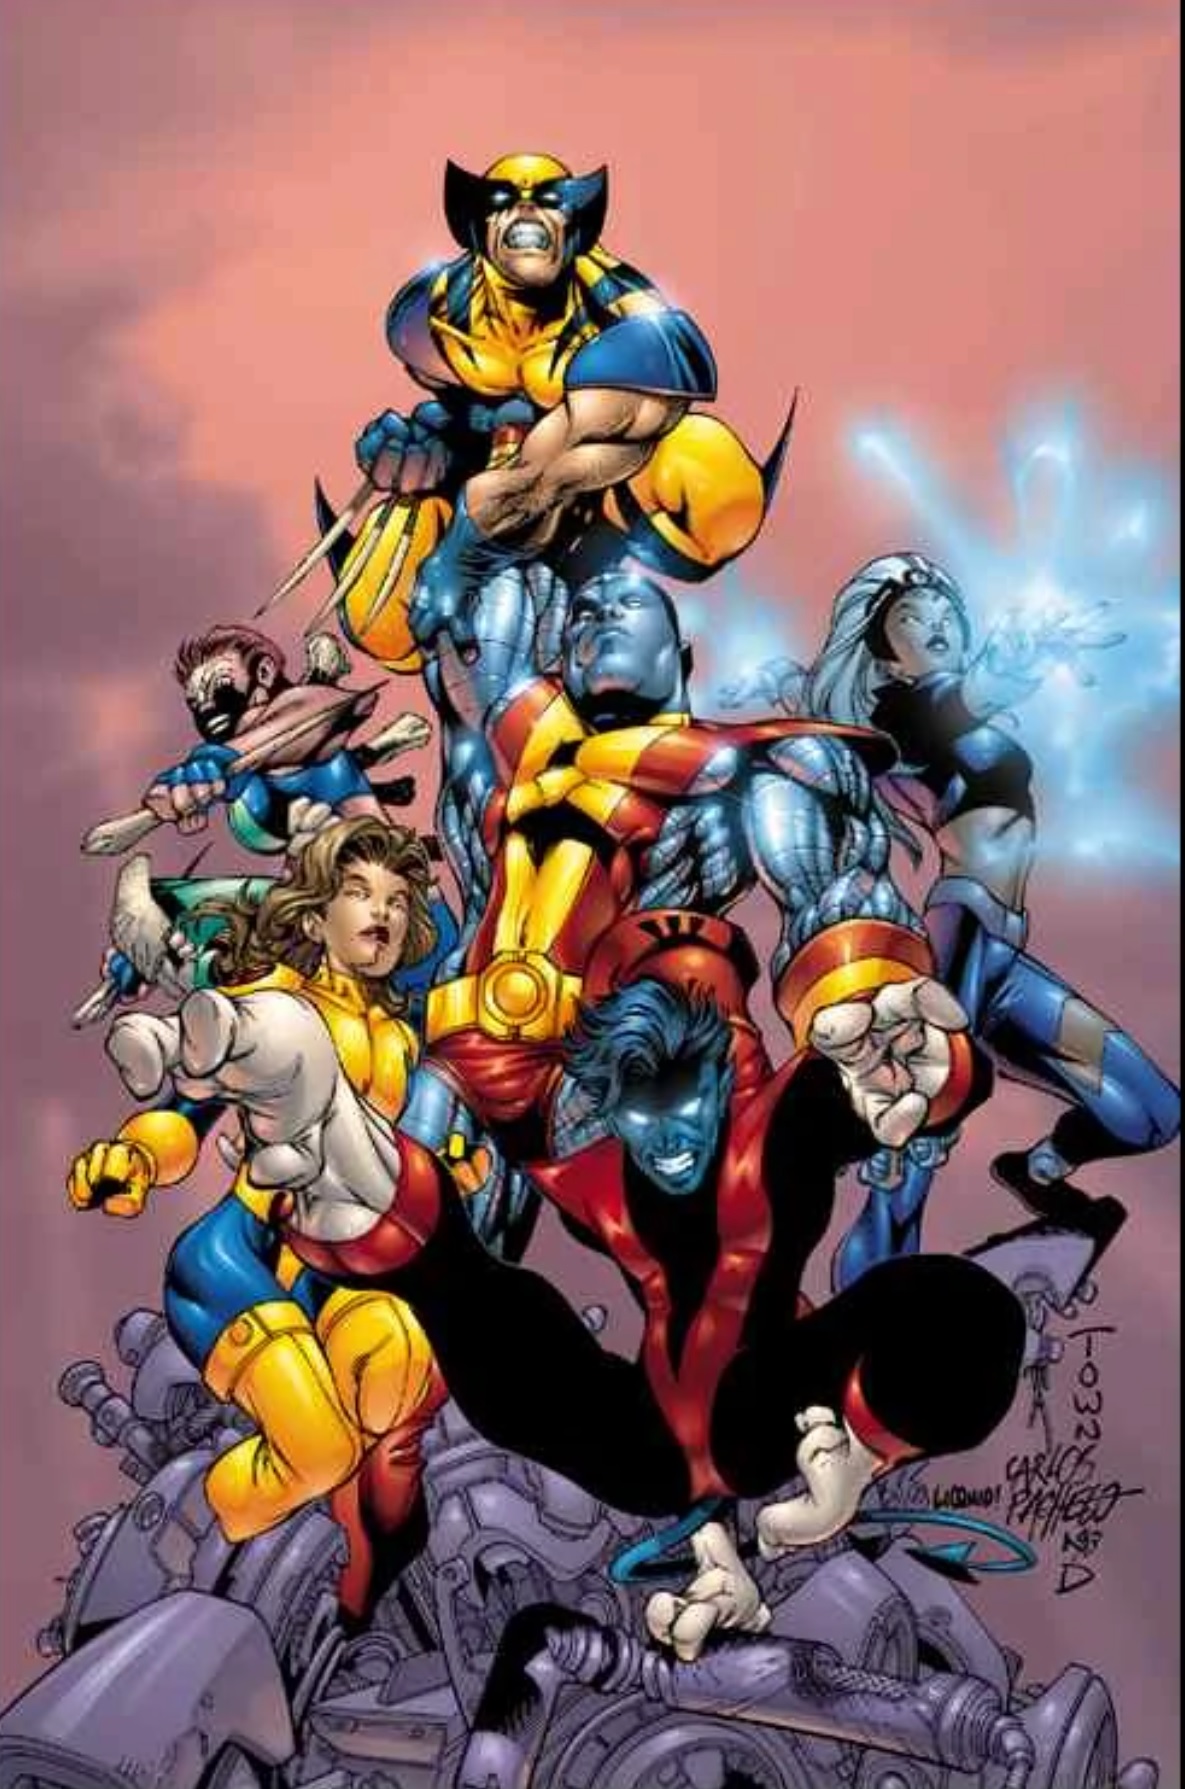 Portada pa X-Men #80, de Carlos Pacheco.